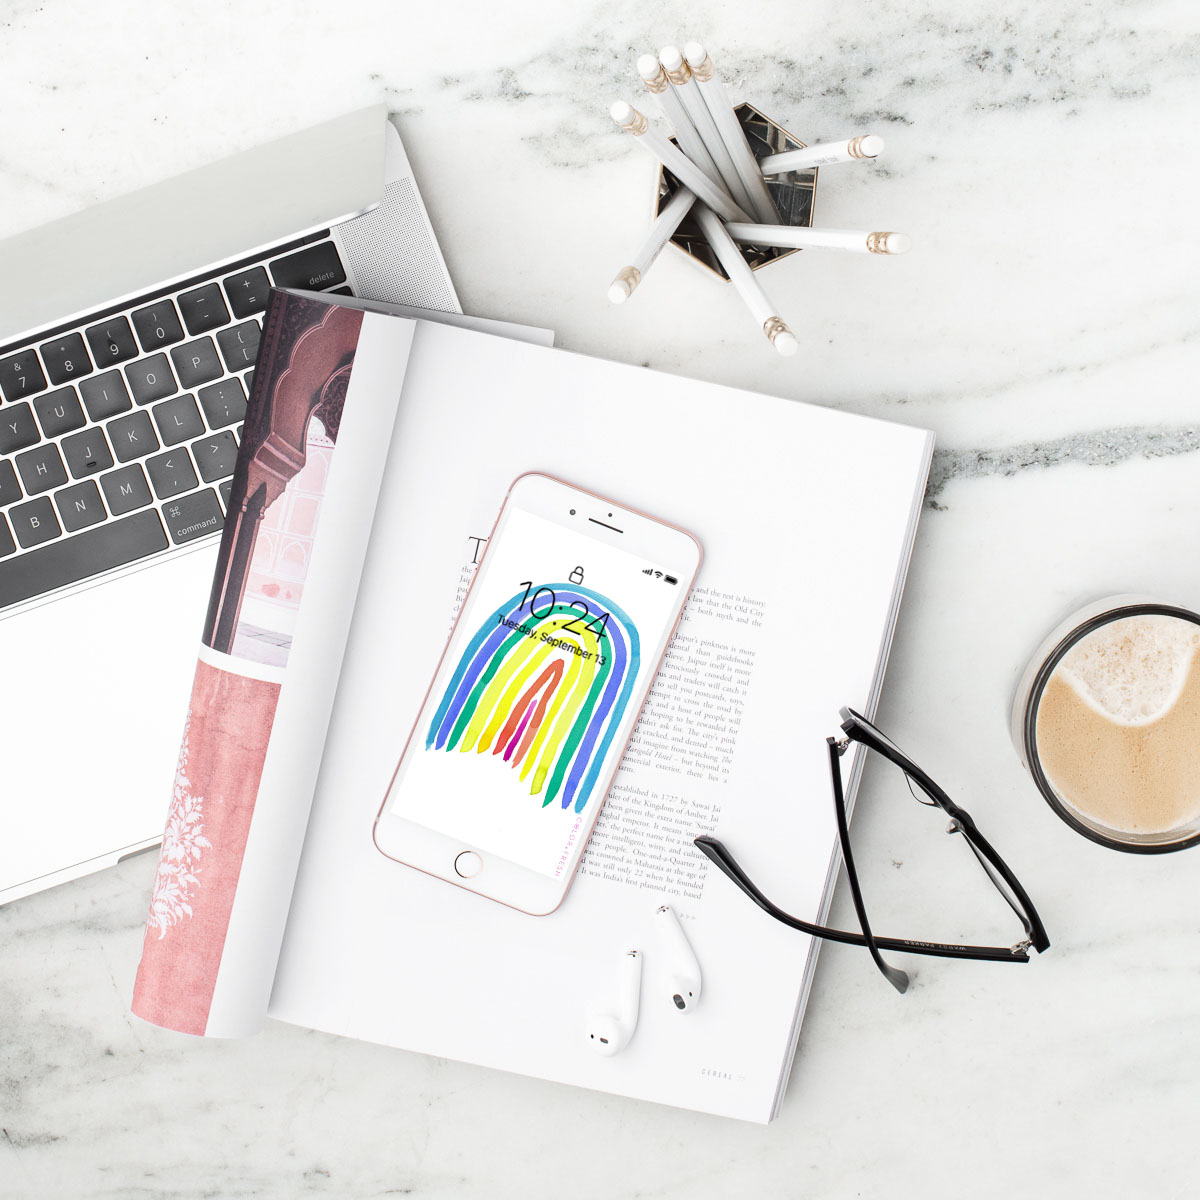 flat lay of laptop, magazine, iphone with rainbow image, glasses